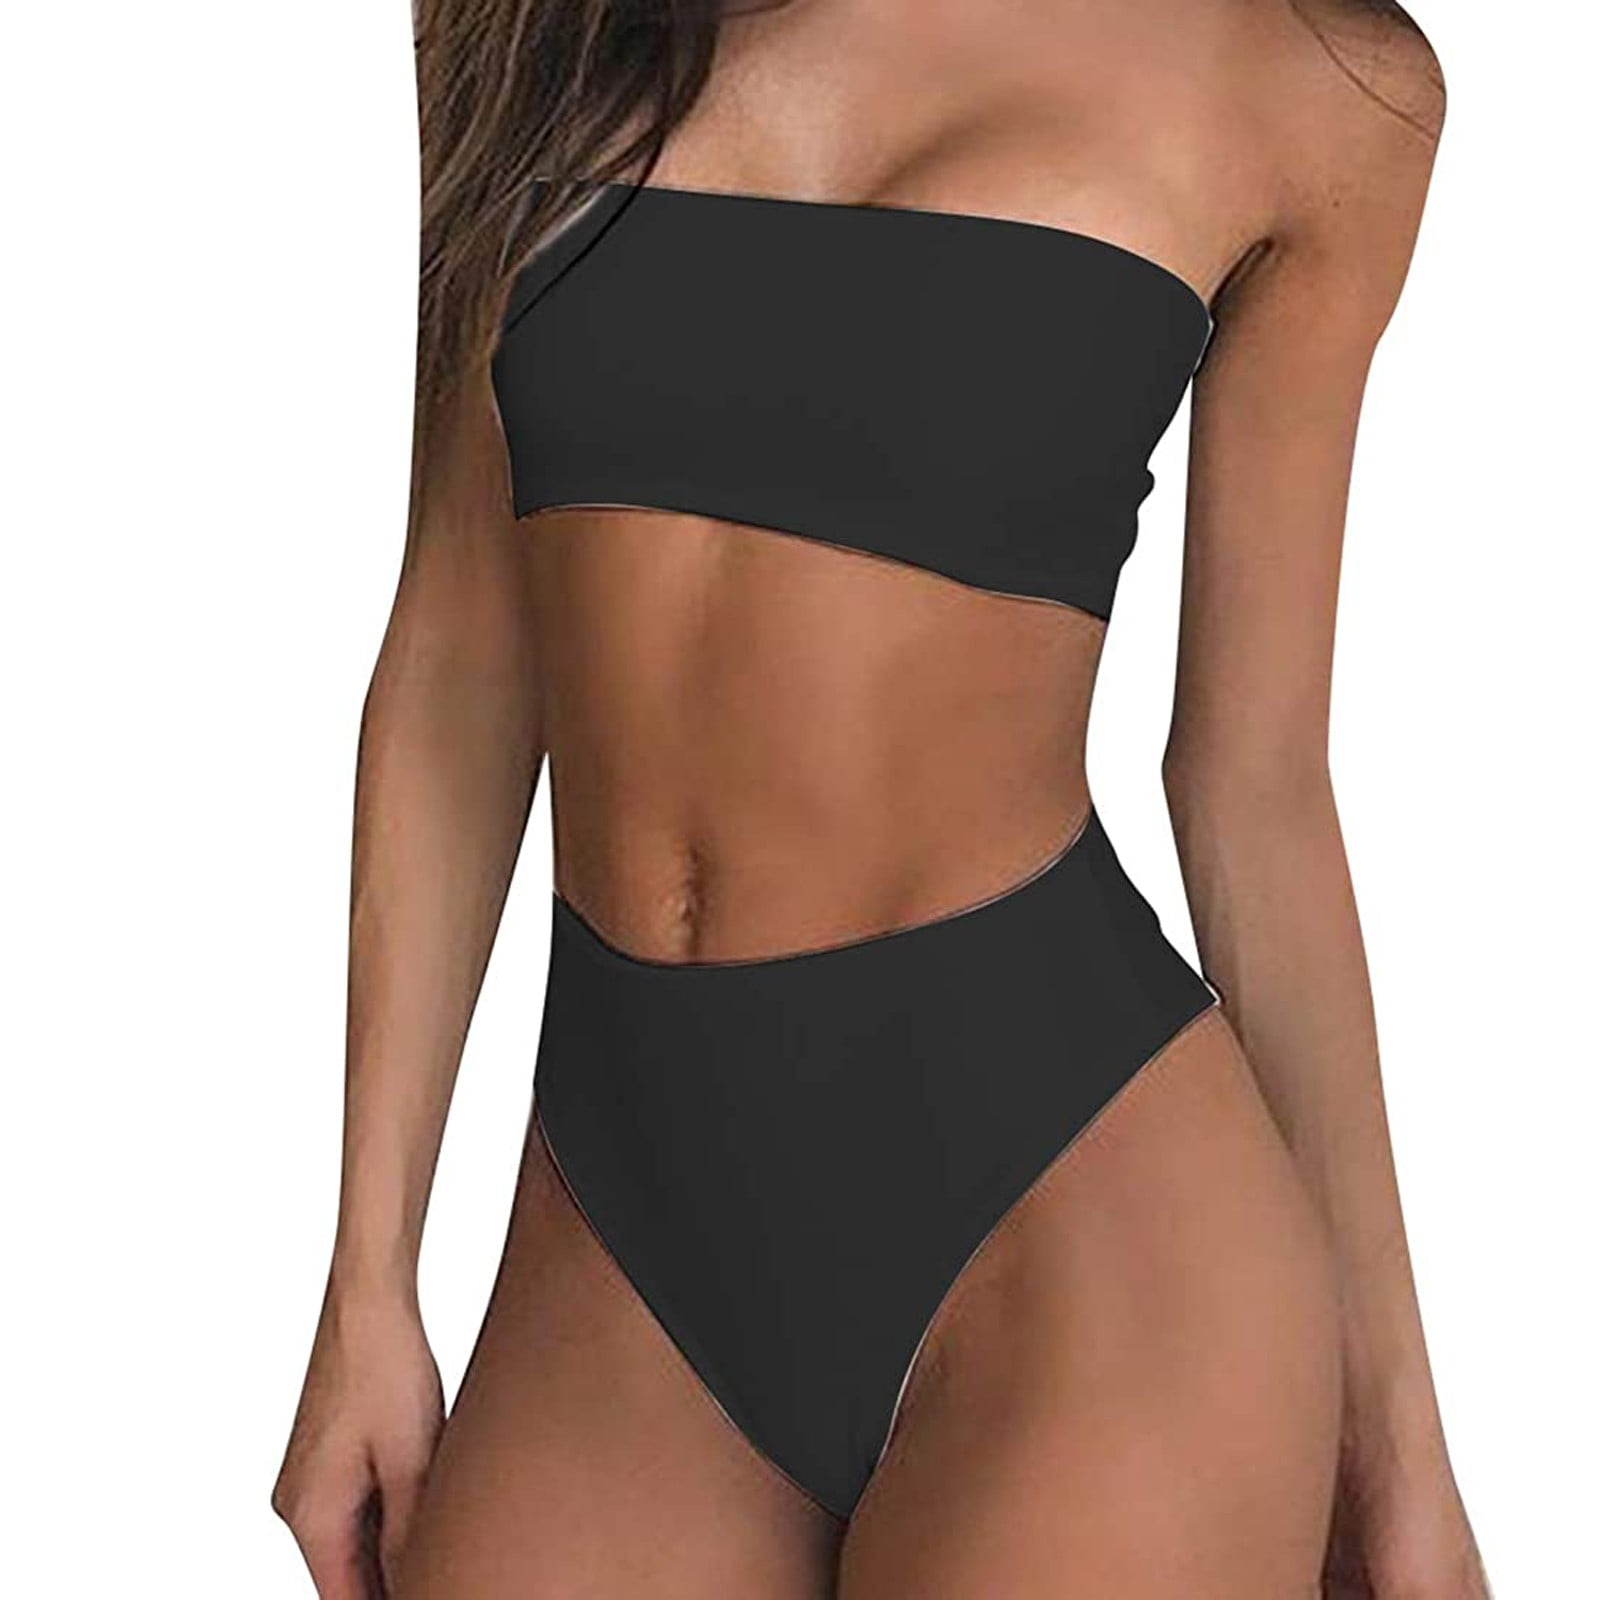 Viottiset Women's Plus Size Swimsuit Ruffled High Waist Two Pieces Bathing Suits Bikini Sets 